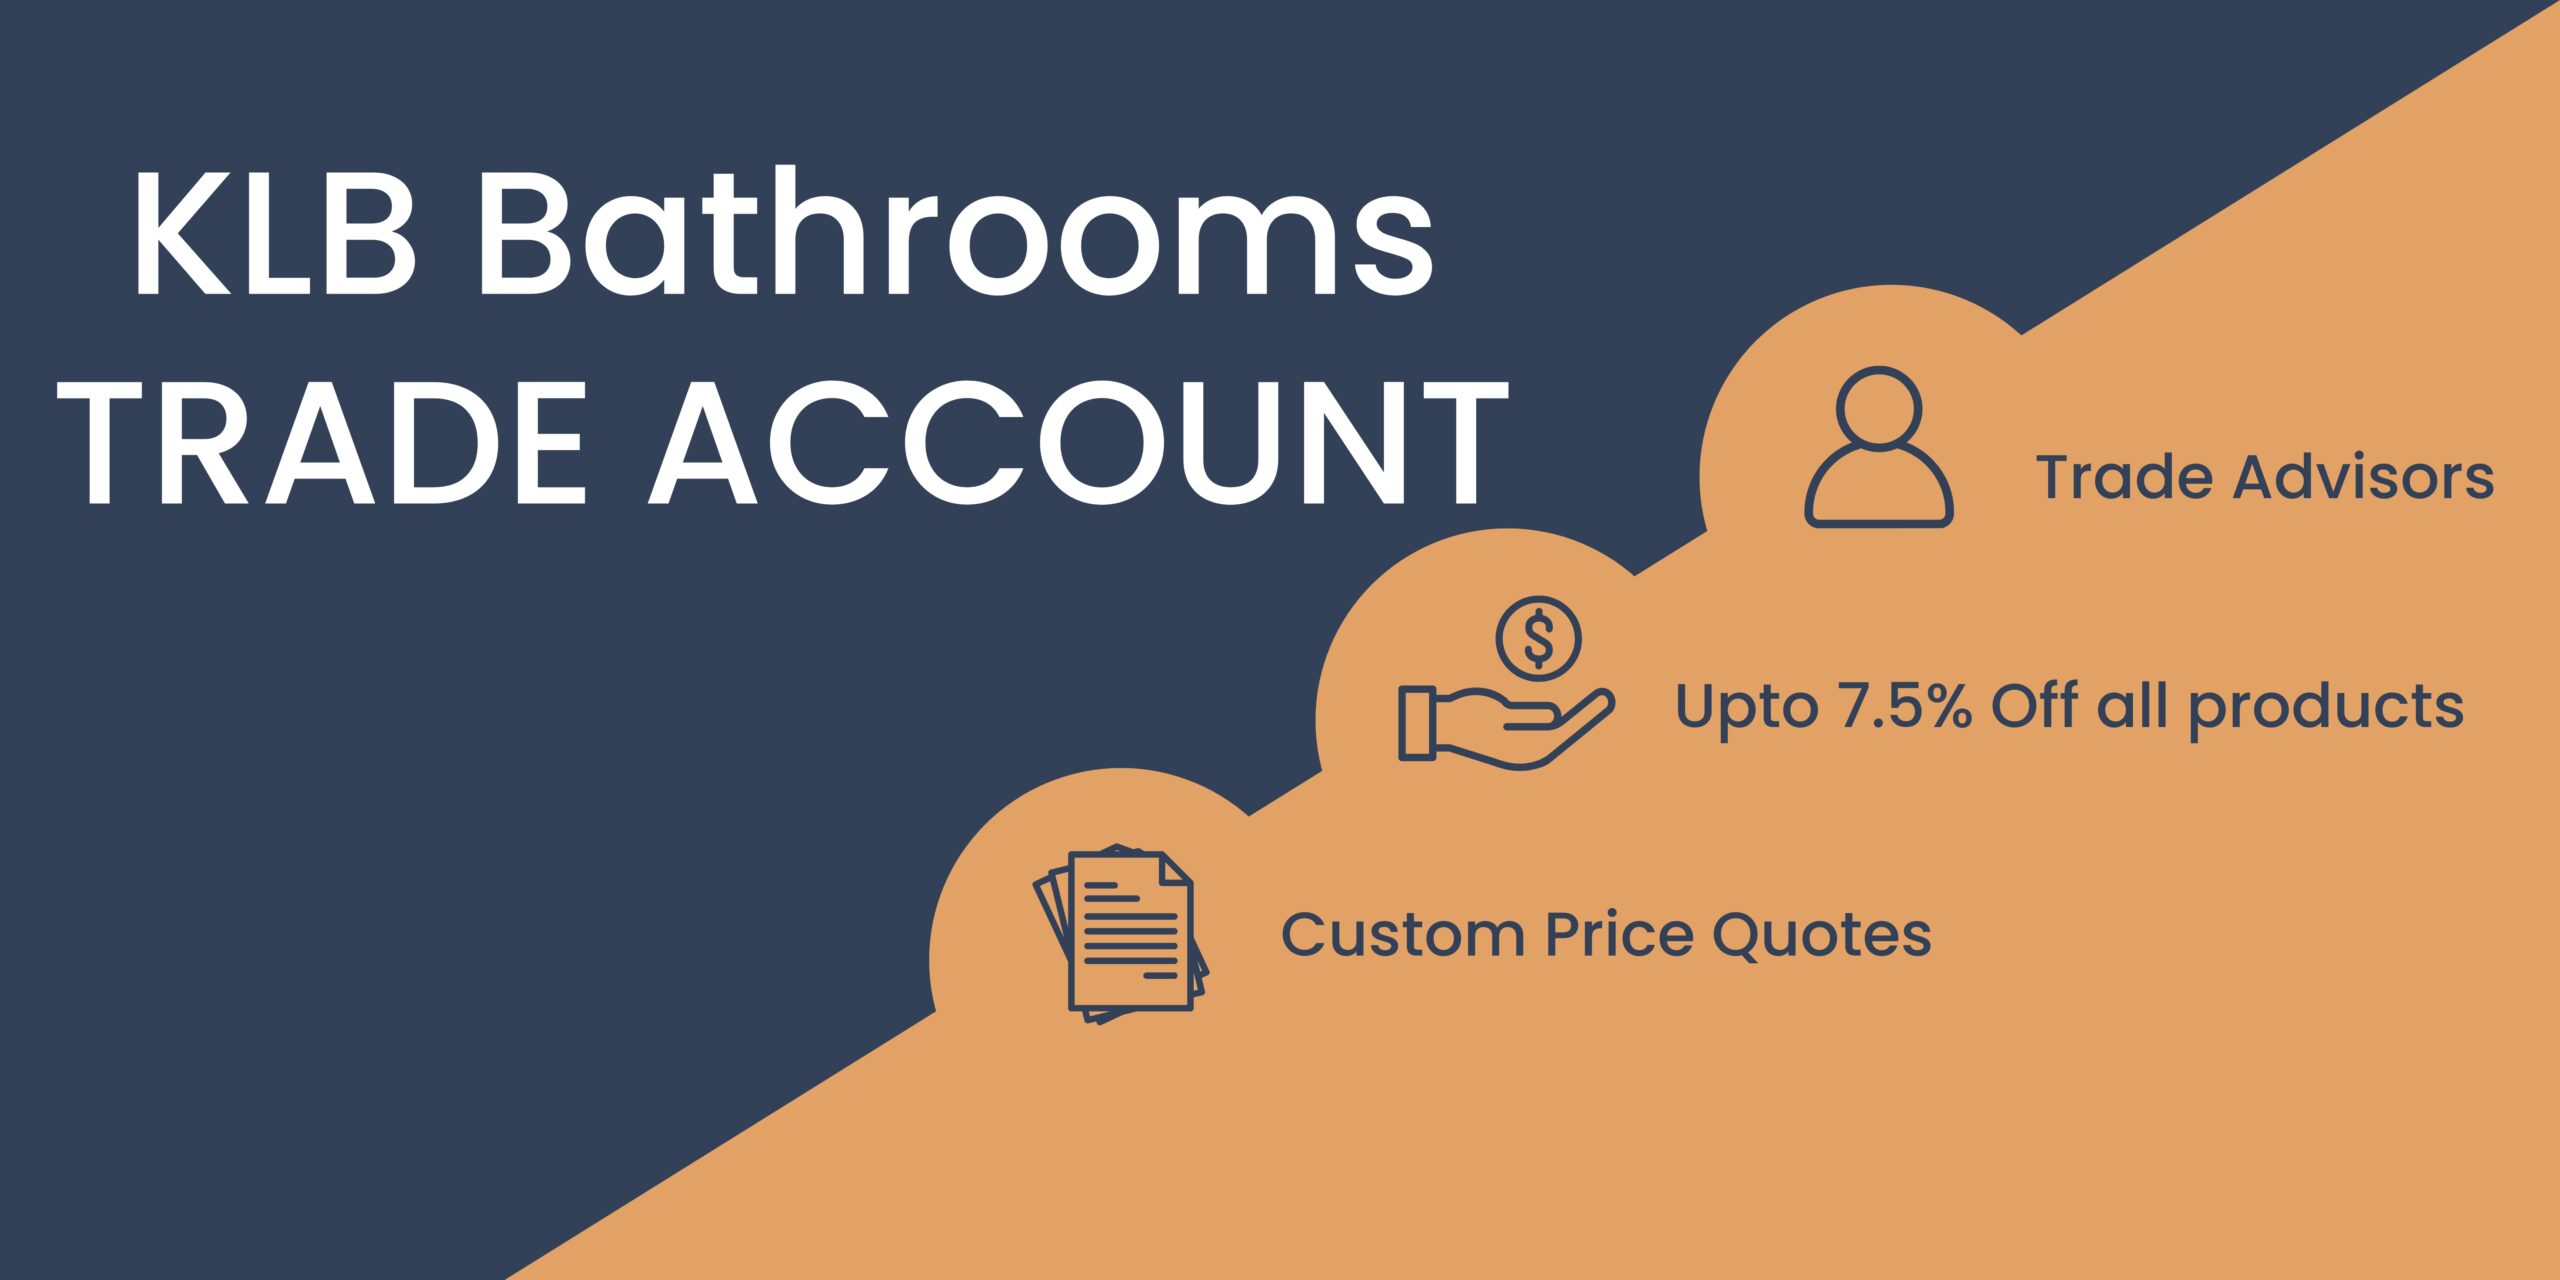 KLB Bathrooms Trade Account